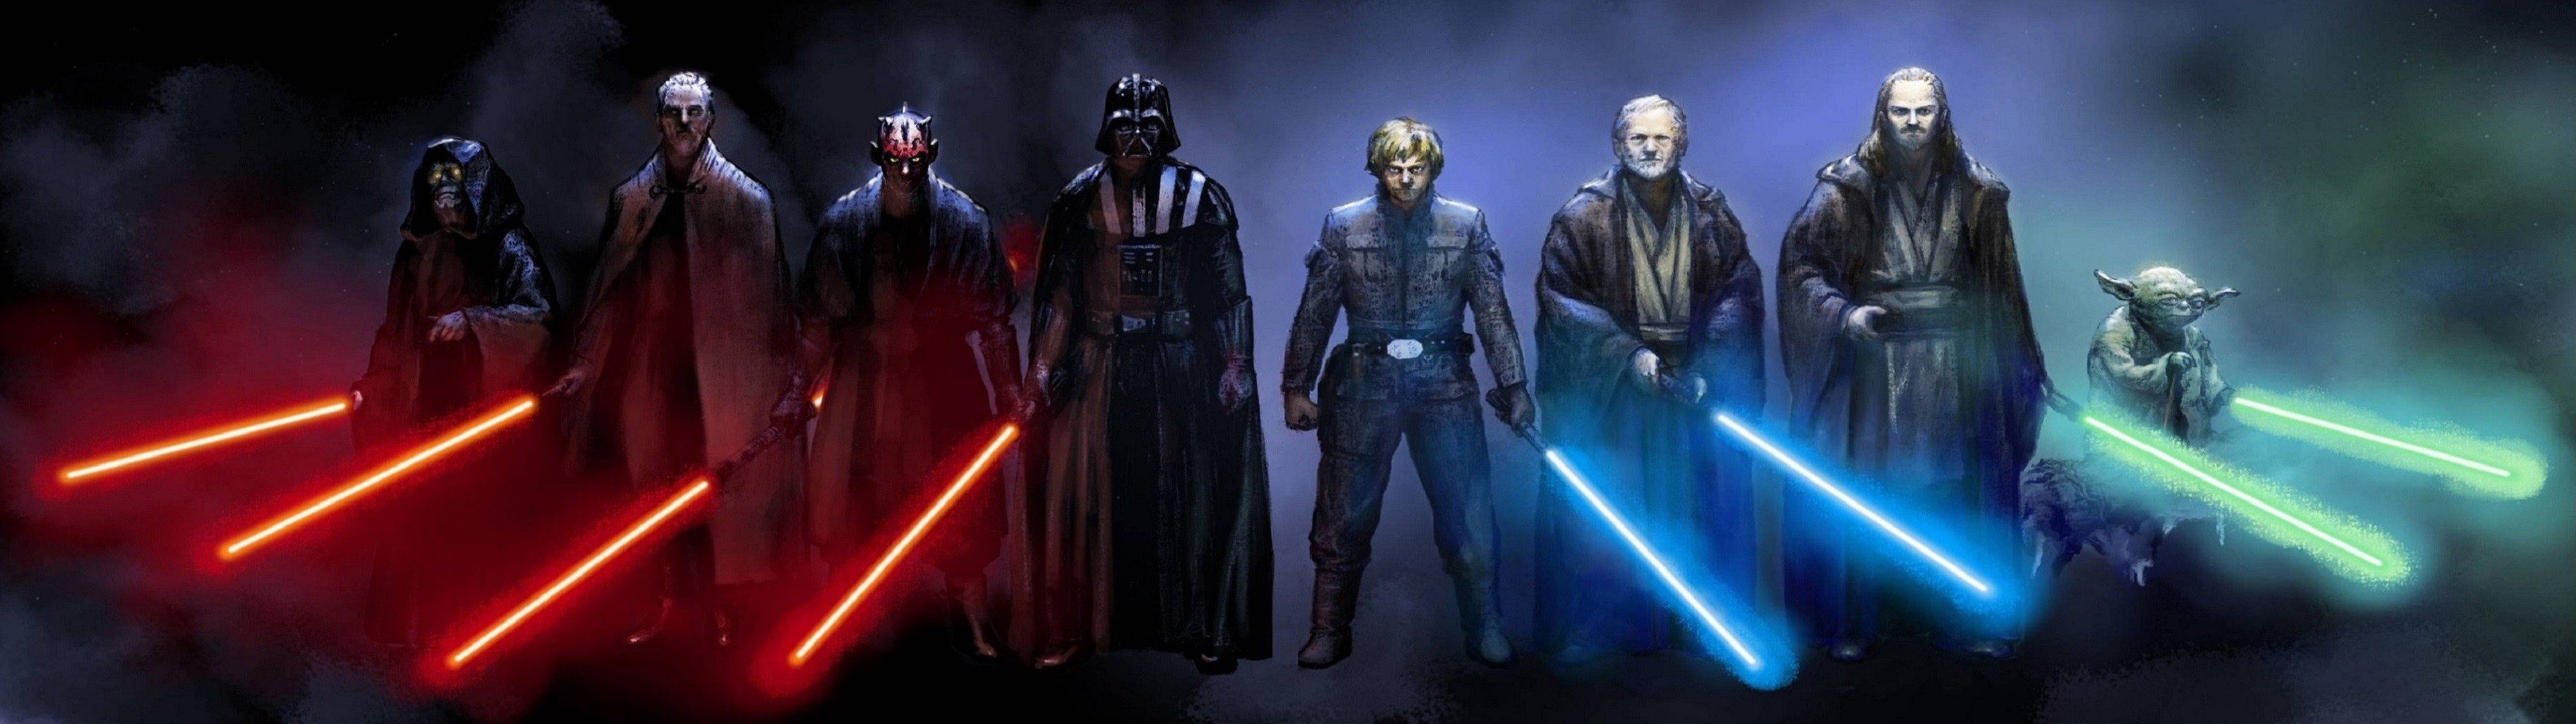 Luke Skywalker, Star Wars, Yoda, Darth Vader, Obi, Wan Kenobi (3840x1080px) on Wallls.com